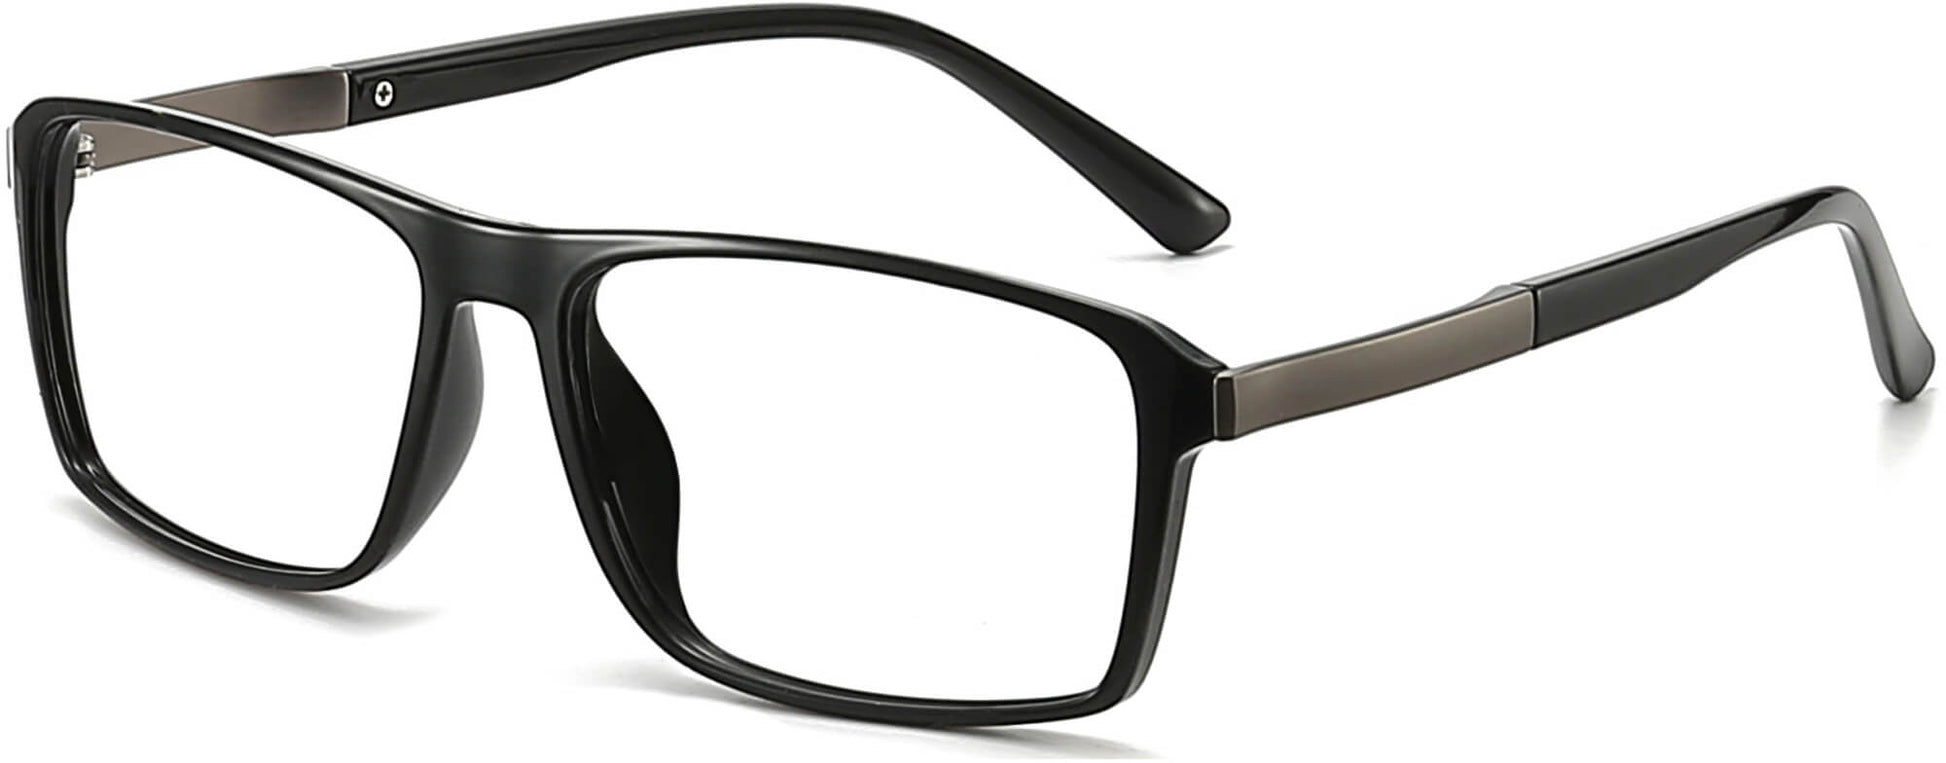 Esteban Rectangle Black  Eyeglasses from ANRRI, angle view